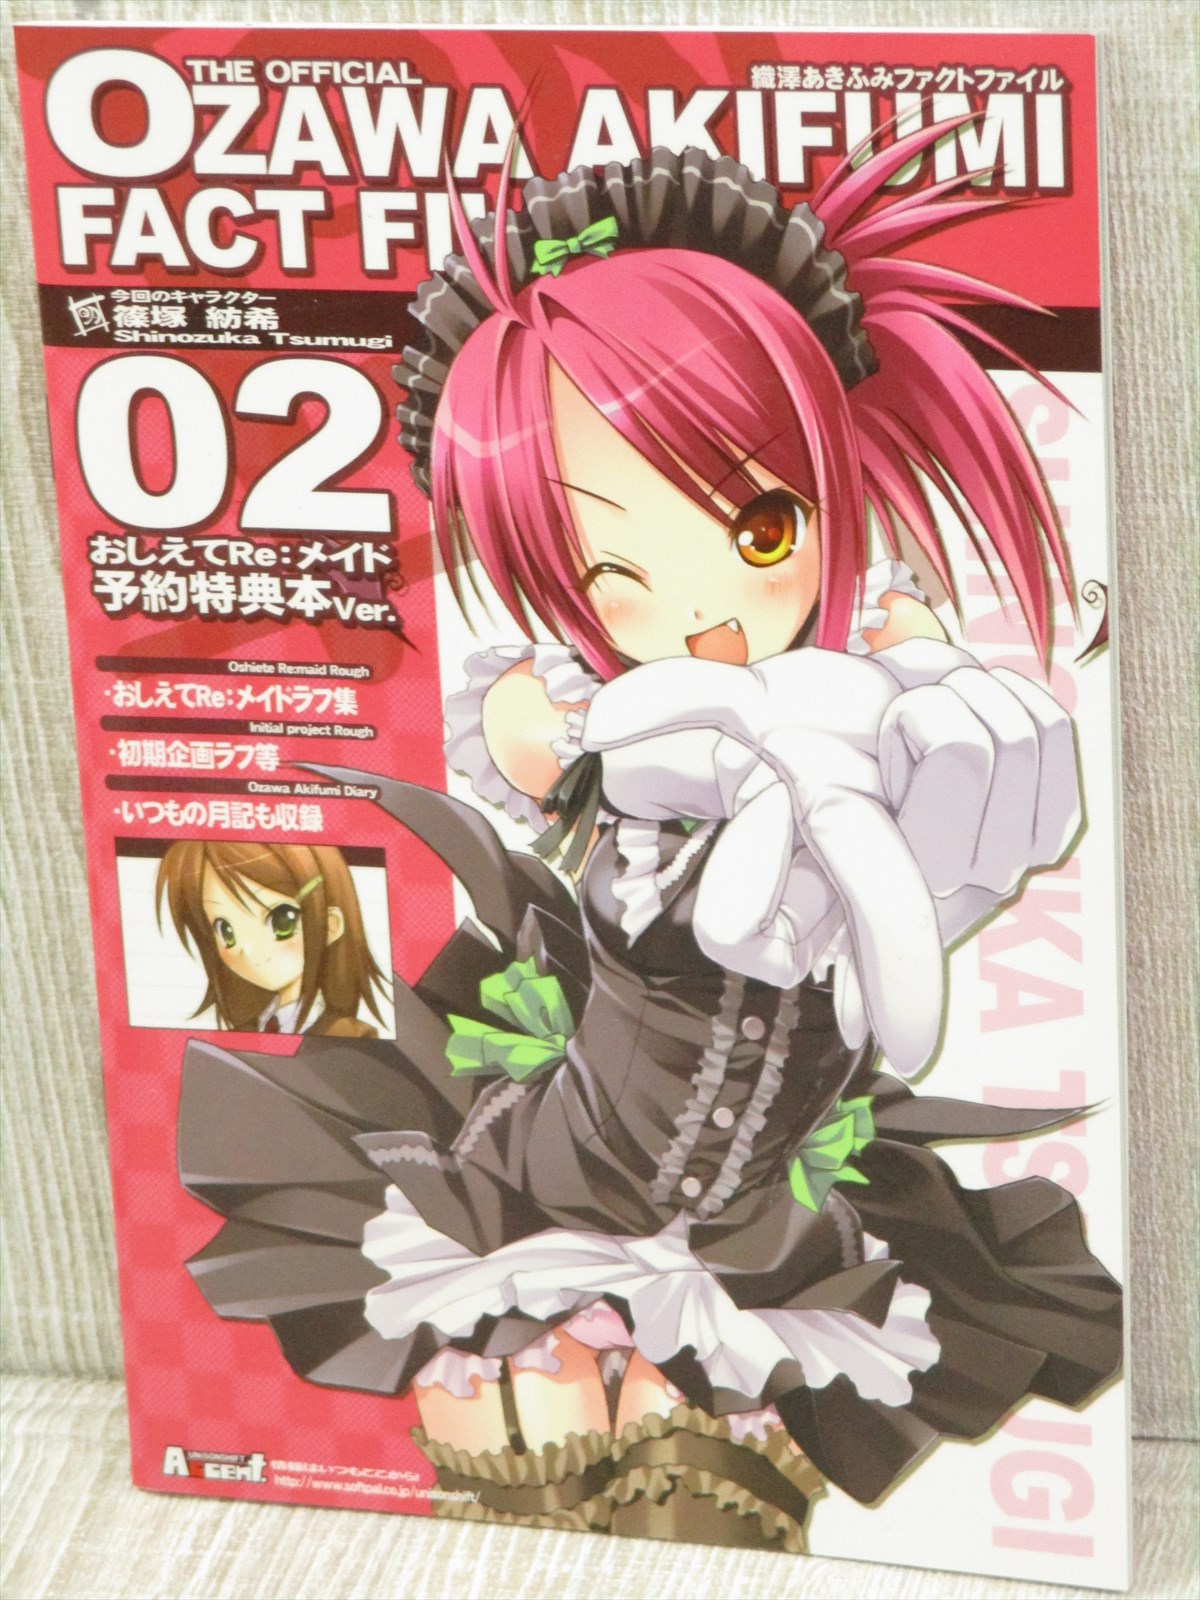 Akifumi Ozawa Fact File 02 Art Works Oshiete Re Maid Fan Book Booklet Ltd Ebay